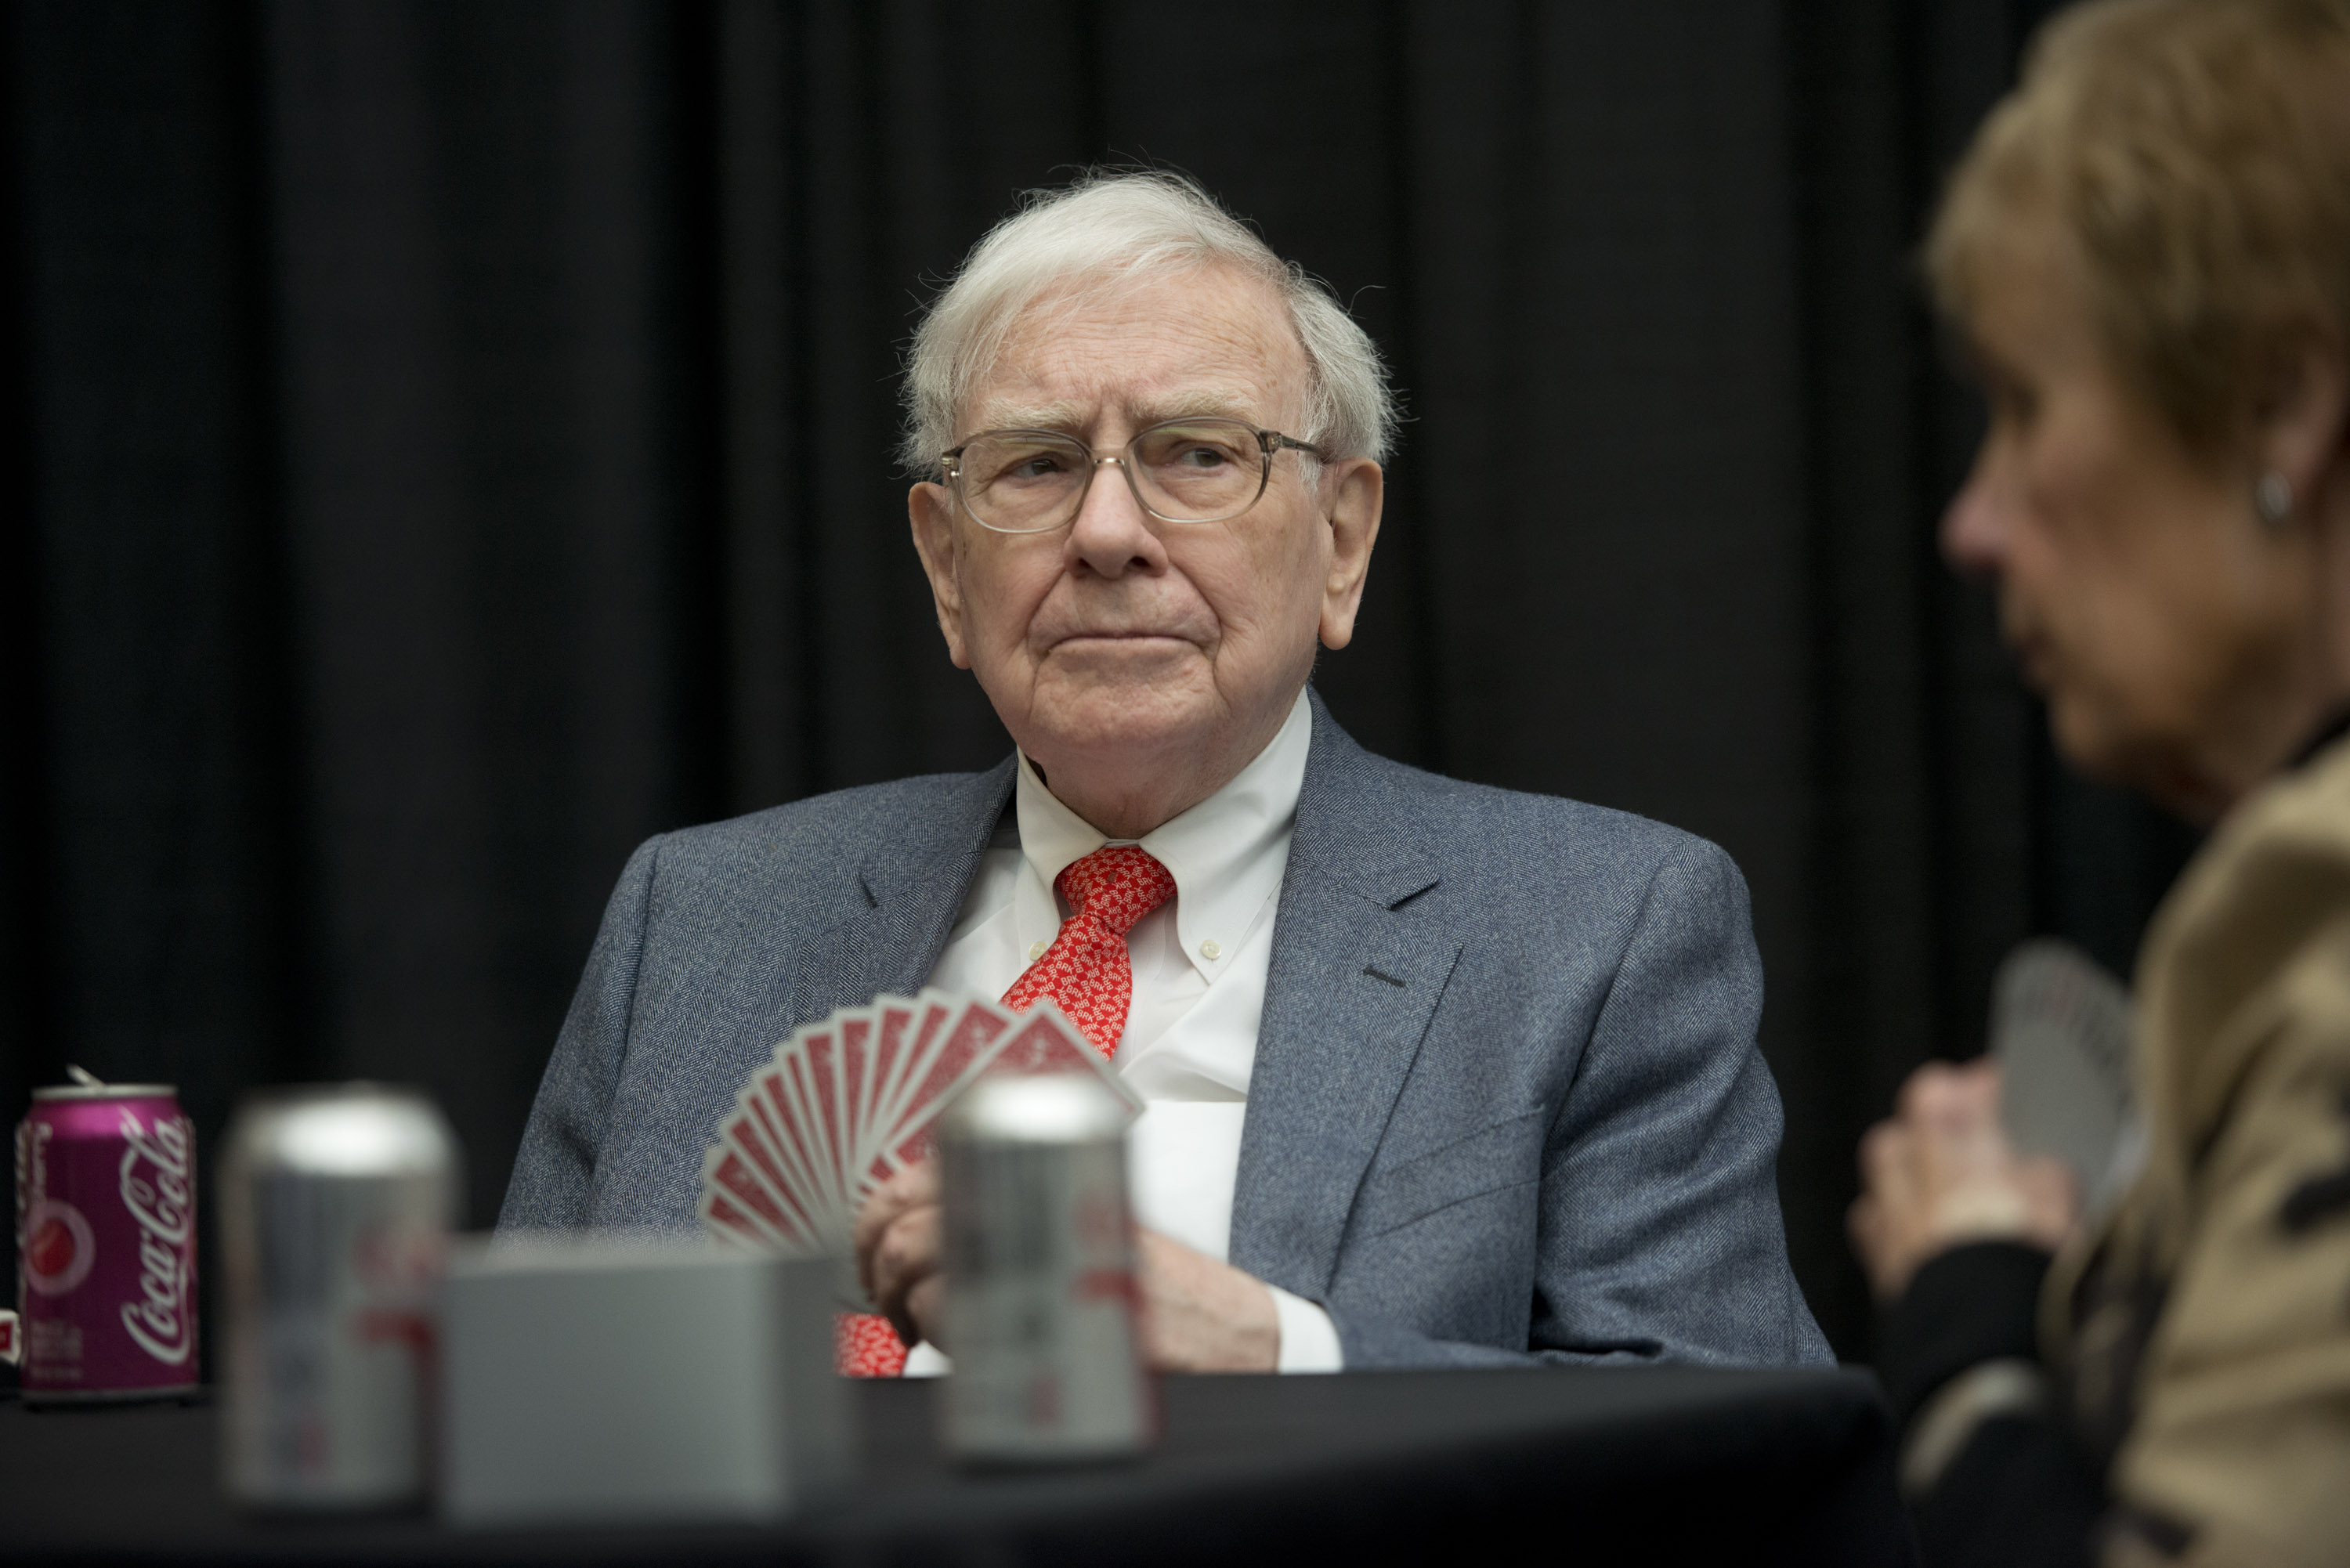 Warren Buffett is an avid bridge player. Here he is at the 2013 Berkshire Hathaway shareholders’ meeting.